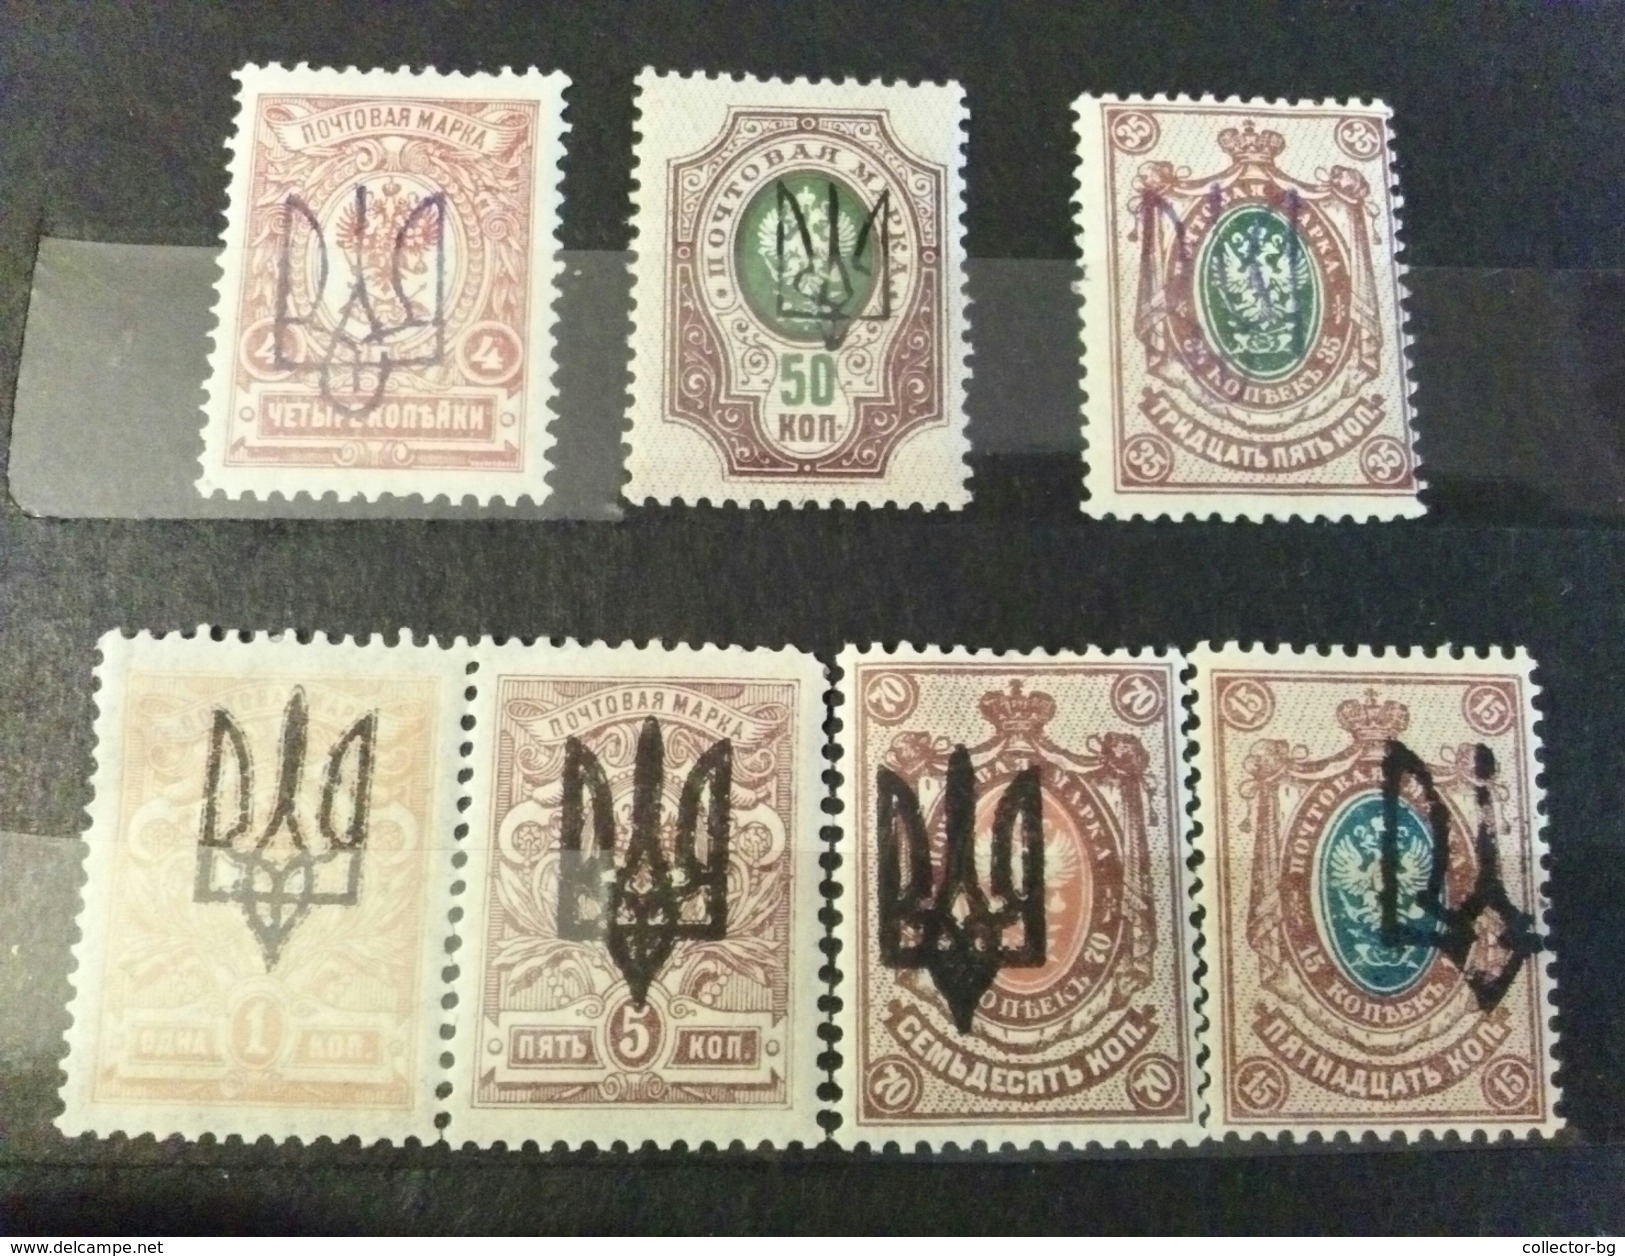 RARE SET LOT SUPERB RUSSIA EMPIRE 1+4+5+15+35+50+70 KOP OVERPRINT UKRAINE UNUSED/MINT/NEUF STAMP TIMBRE - Unused Stamps